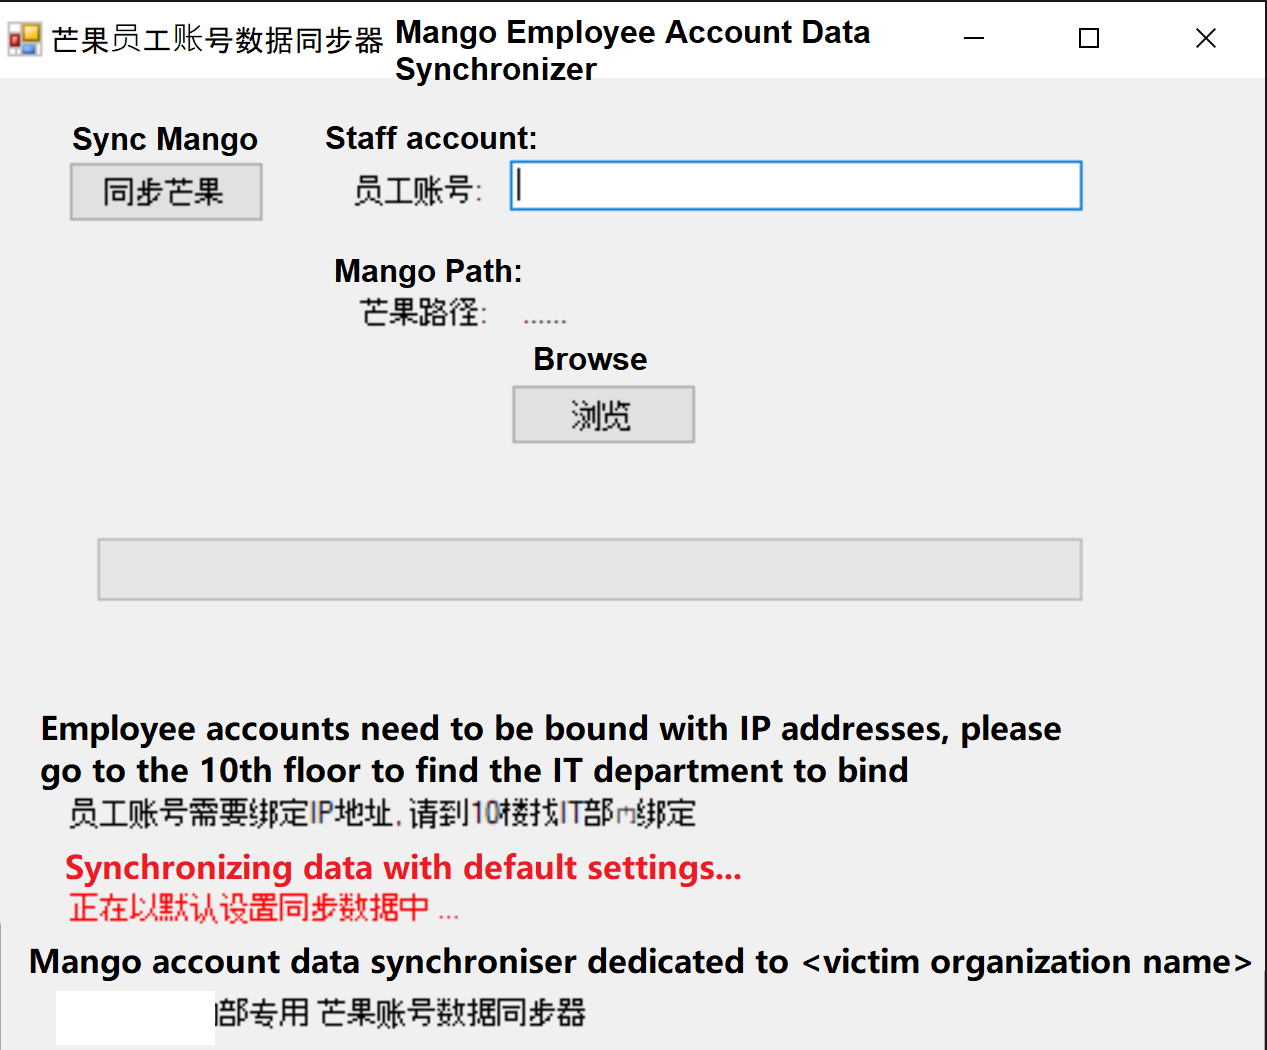 Window of the malicious Mango Employee Account Data Synchronizer